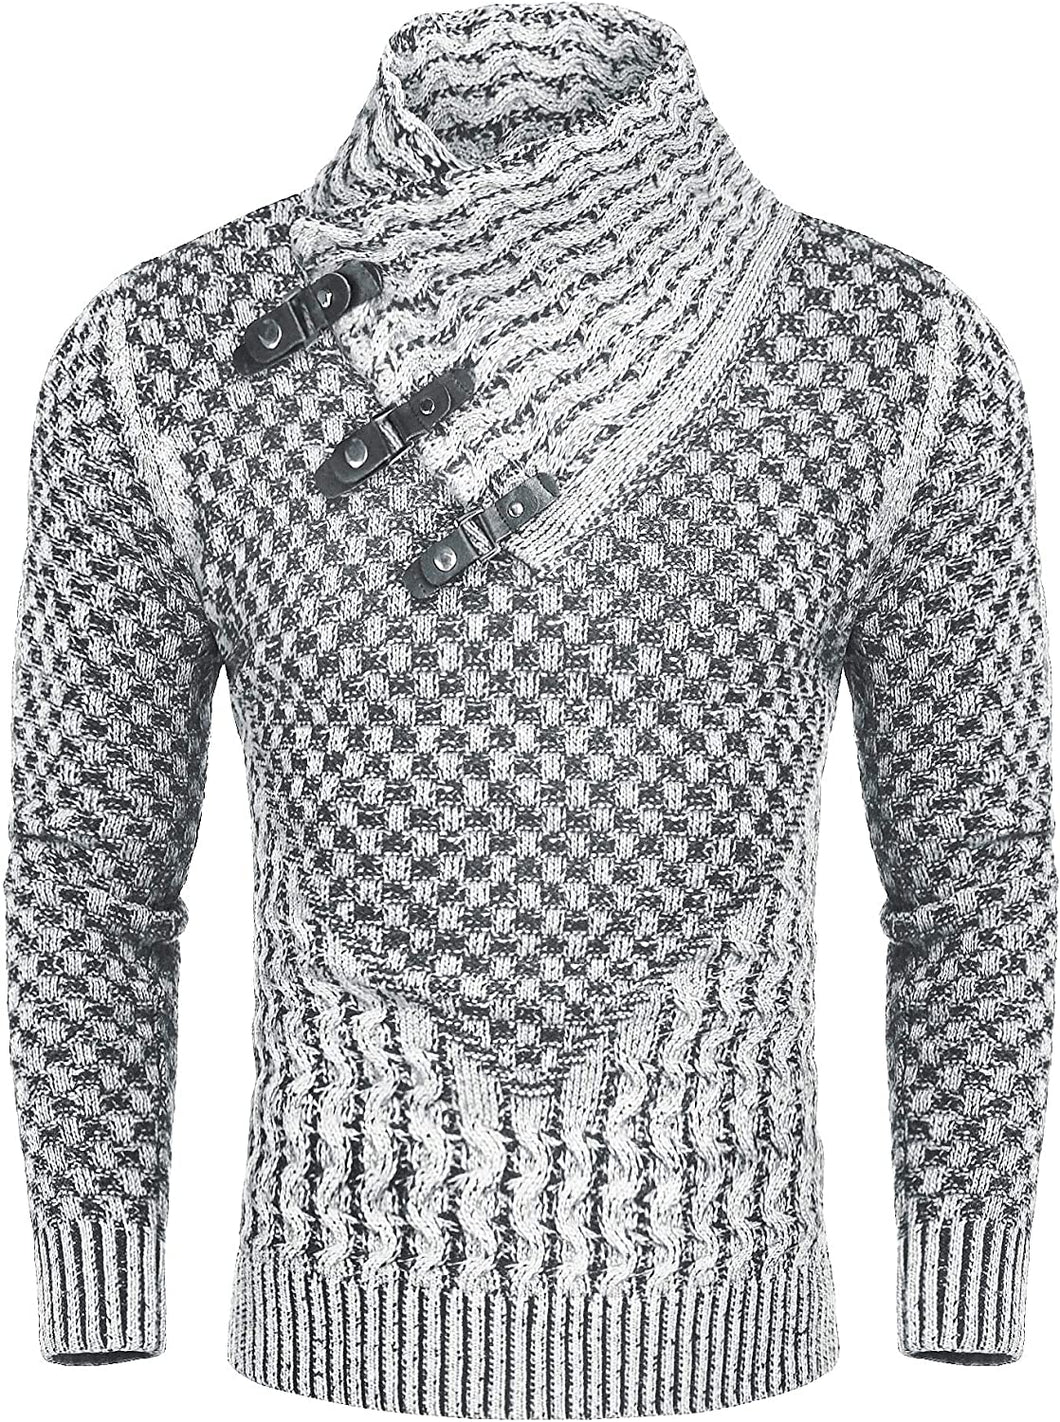 White Long Sleeve Slim Fit Designer Knitted Turtleneck Sweater